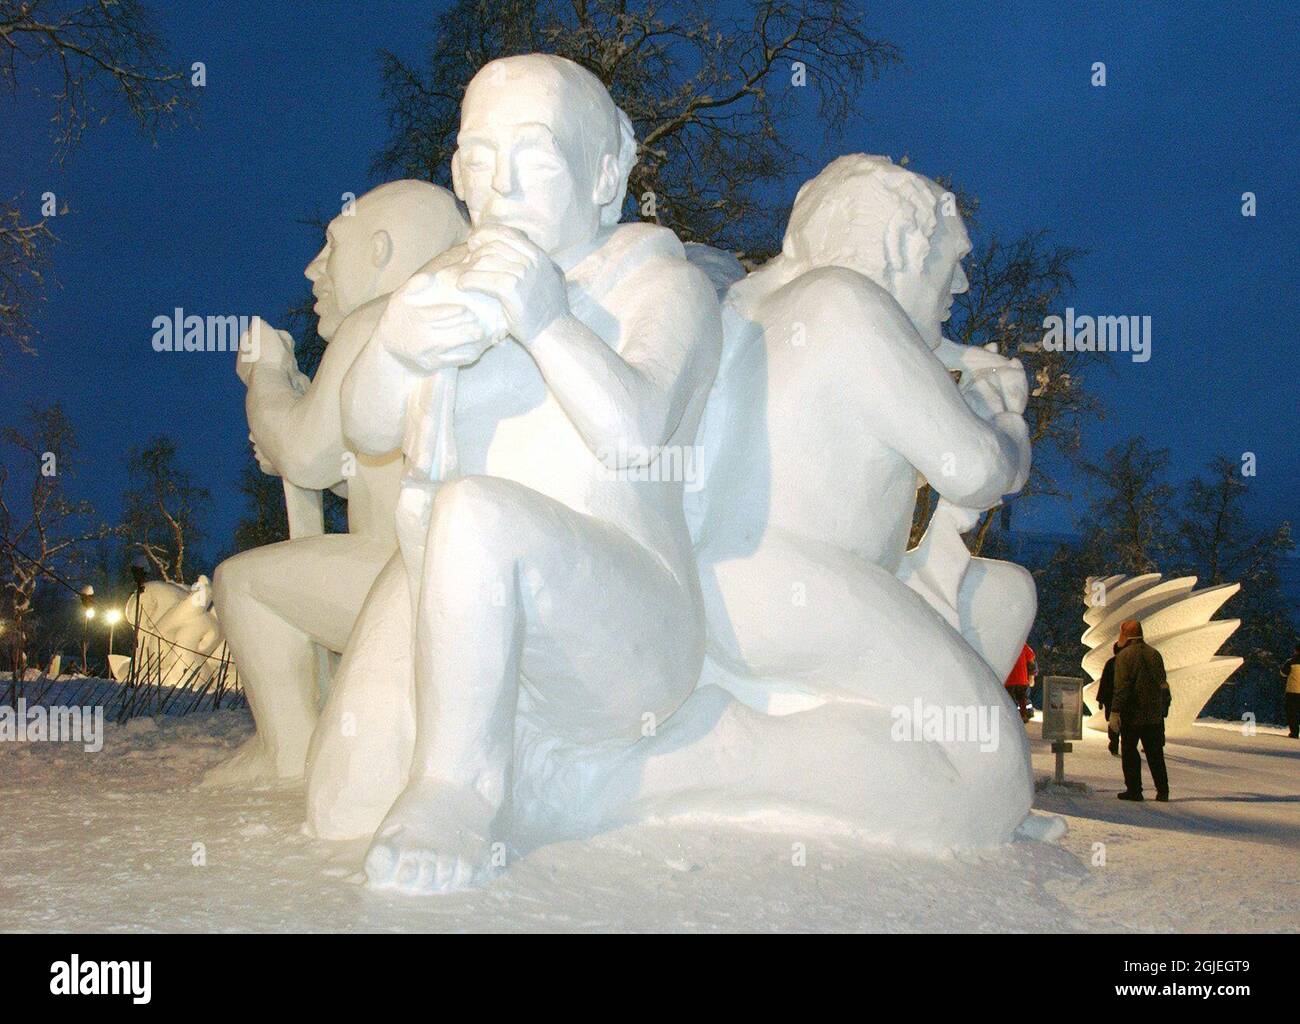 Snow sculptures at the snow festival in Kiruna Sweden. Poland's team Tolki, consisting of Boyuskaw Zen and Matgorzata Korenkiewez, made the winning sculpture 'The Slaves' at the 2004 competition. Stock Photo